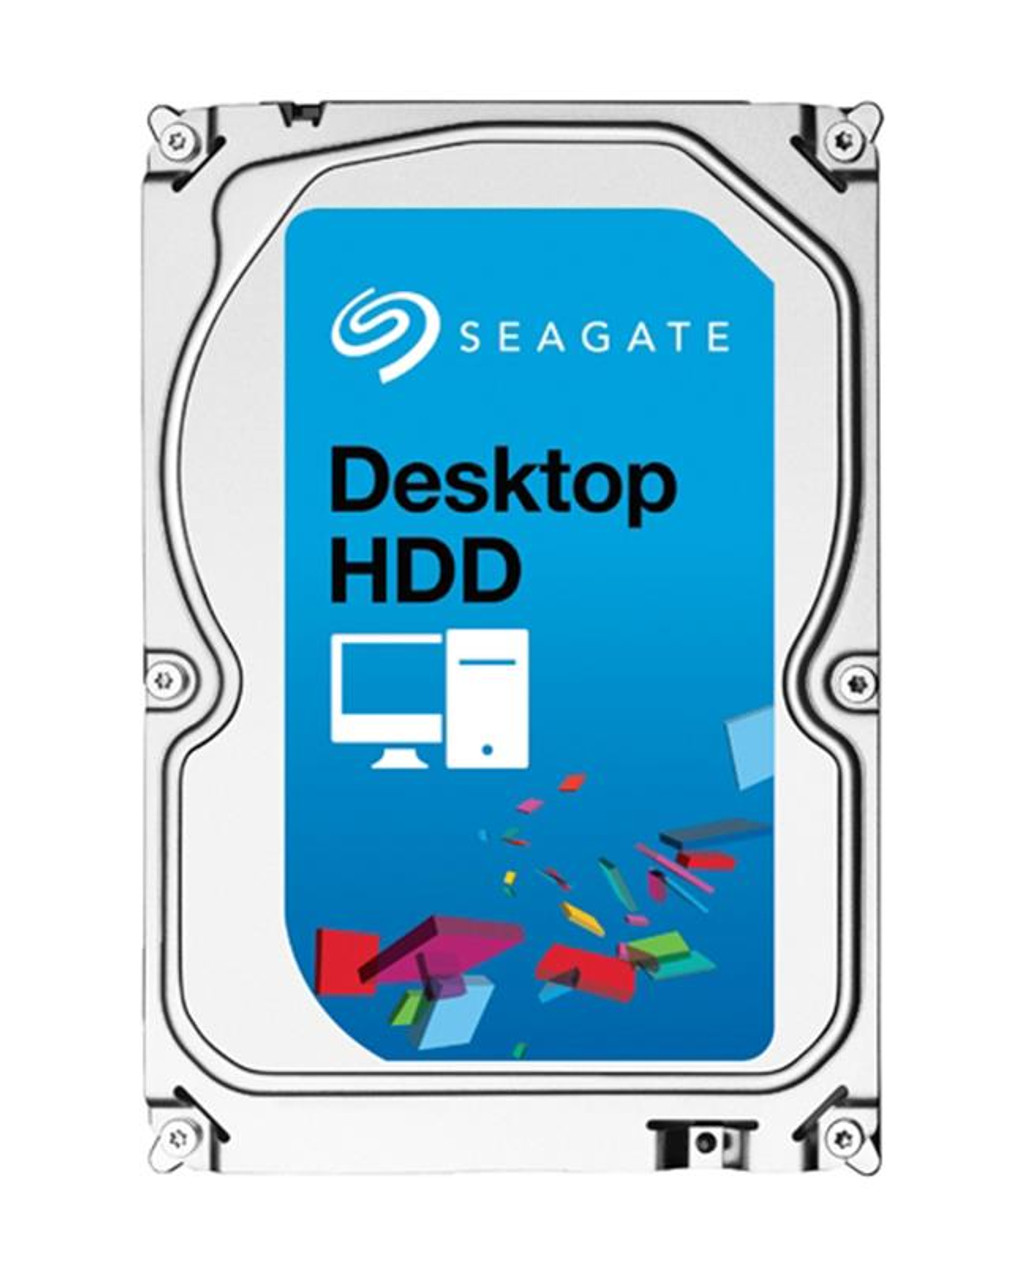 1FK178-000 Seagate Desktop HDD 5TB 5900RPM SATA 6Gbps 128MB Cache 3.5-inch Internal Hard Drive